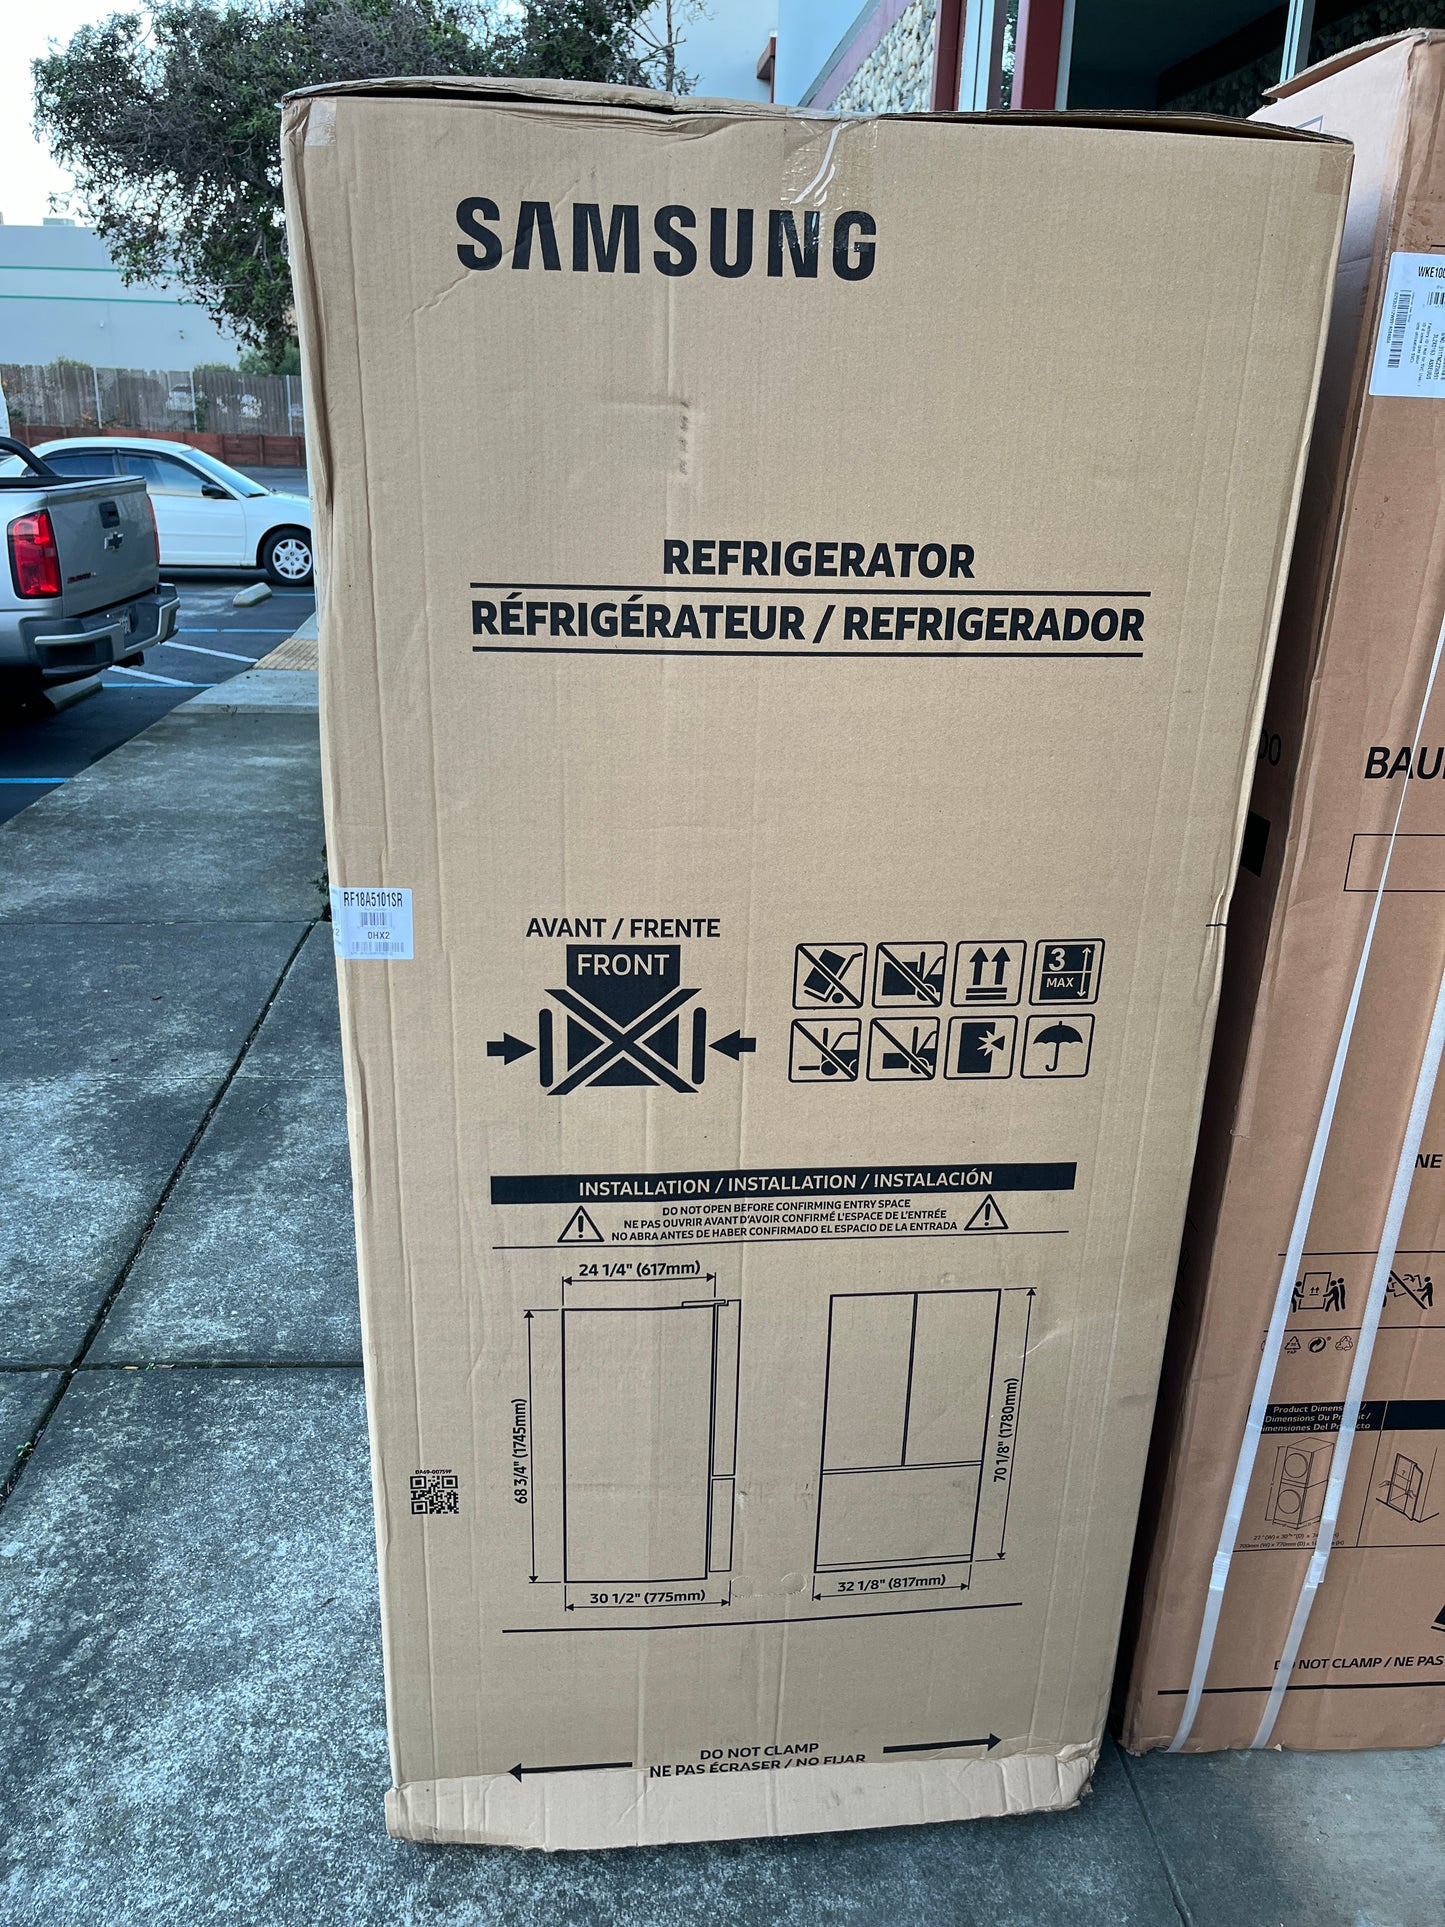 Samsung  RF18A5101SR 33 Inch Counter Depth French Door Smart Refrigerator 17.5 Cu. Ft., Power Cool & Freeze, Twin Cooling Plus, Wi-Fi, Internal Ice Maker, ENERGY STAR, Star-K, ADA ,Fingerprint Resistant Stainless Steel , 369205